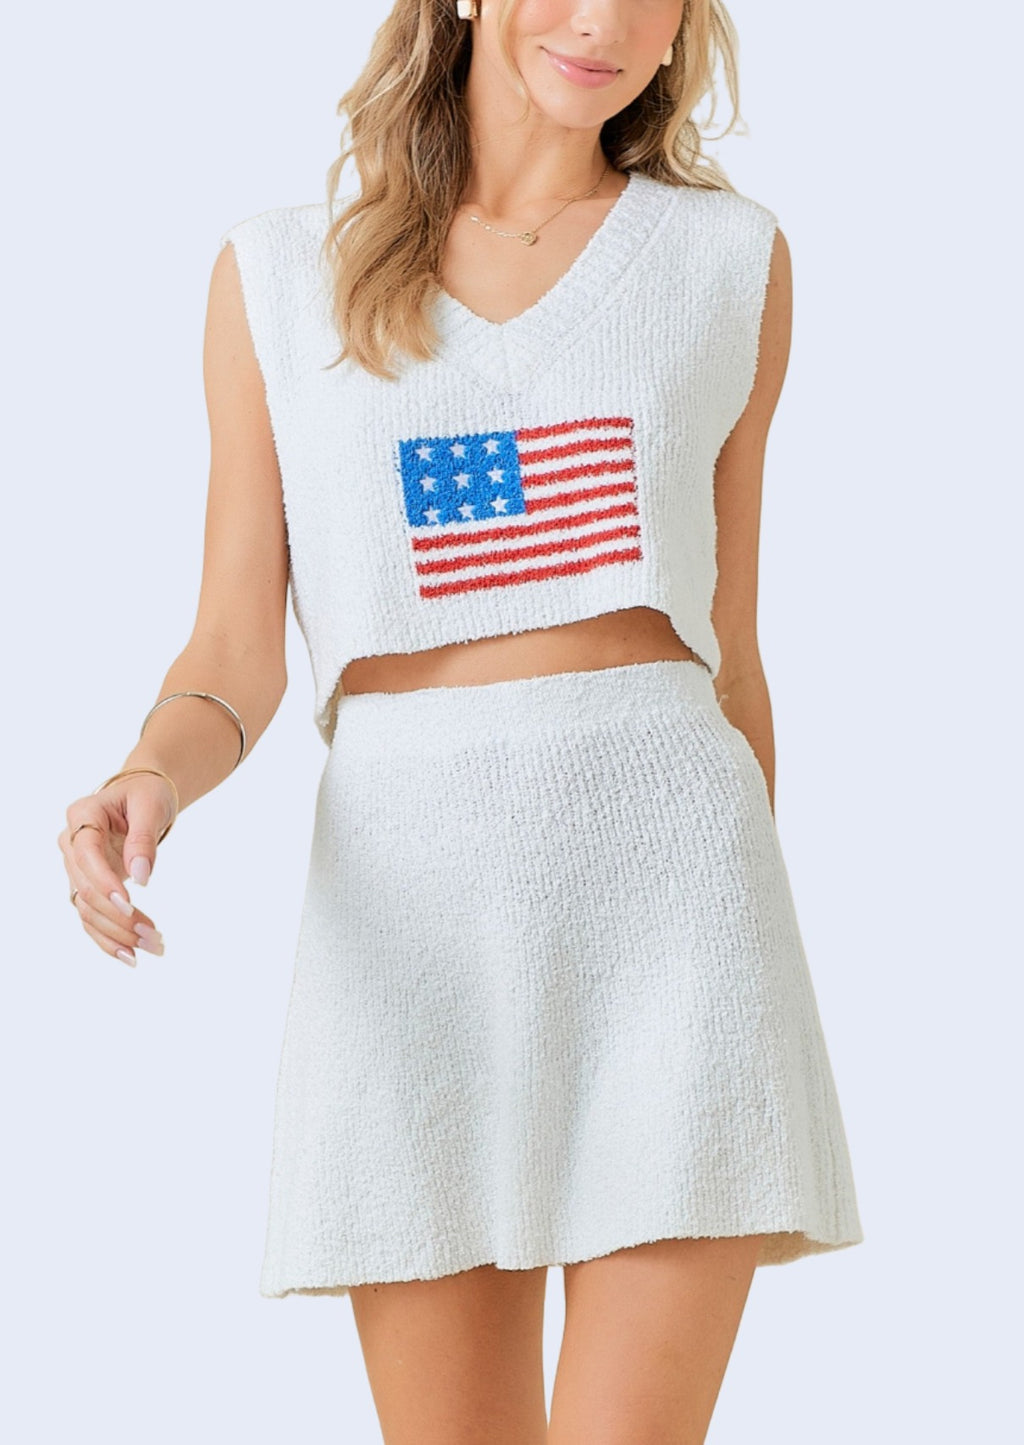 Andie Flag Print Mini Skirt Sweater Set